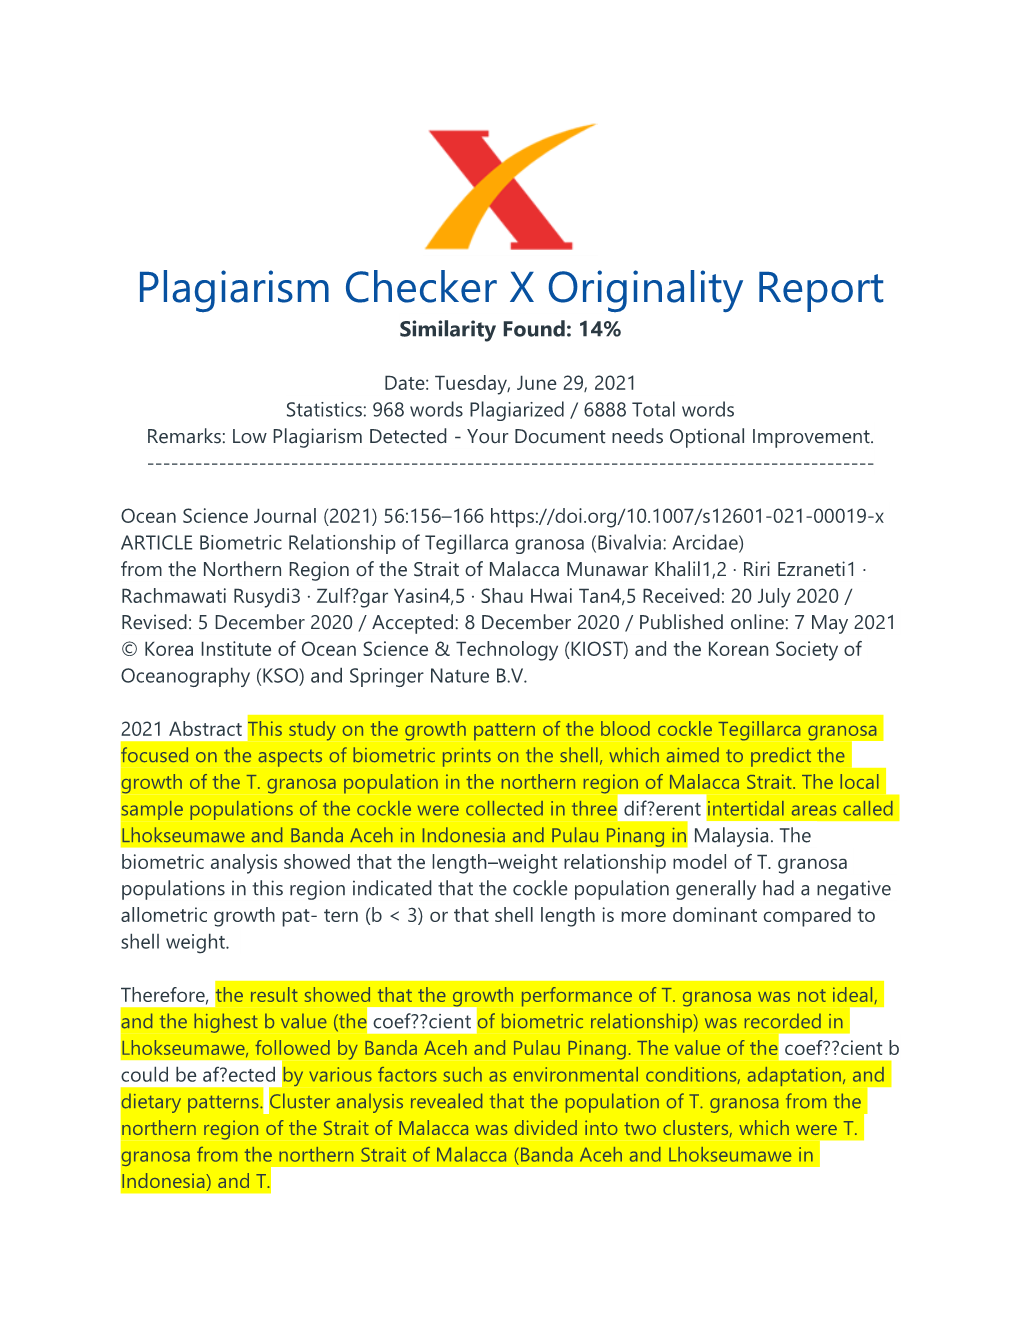 Plagiarism Checker X Originality Report Similarity Found: 14%